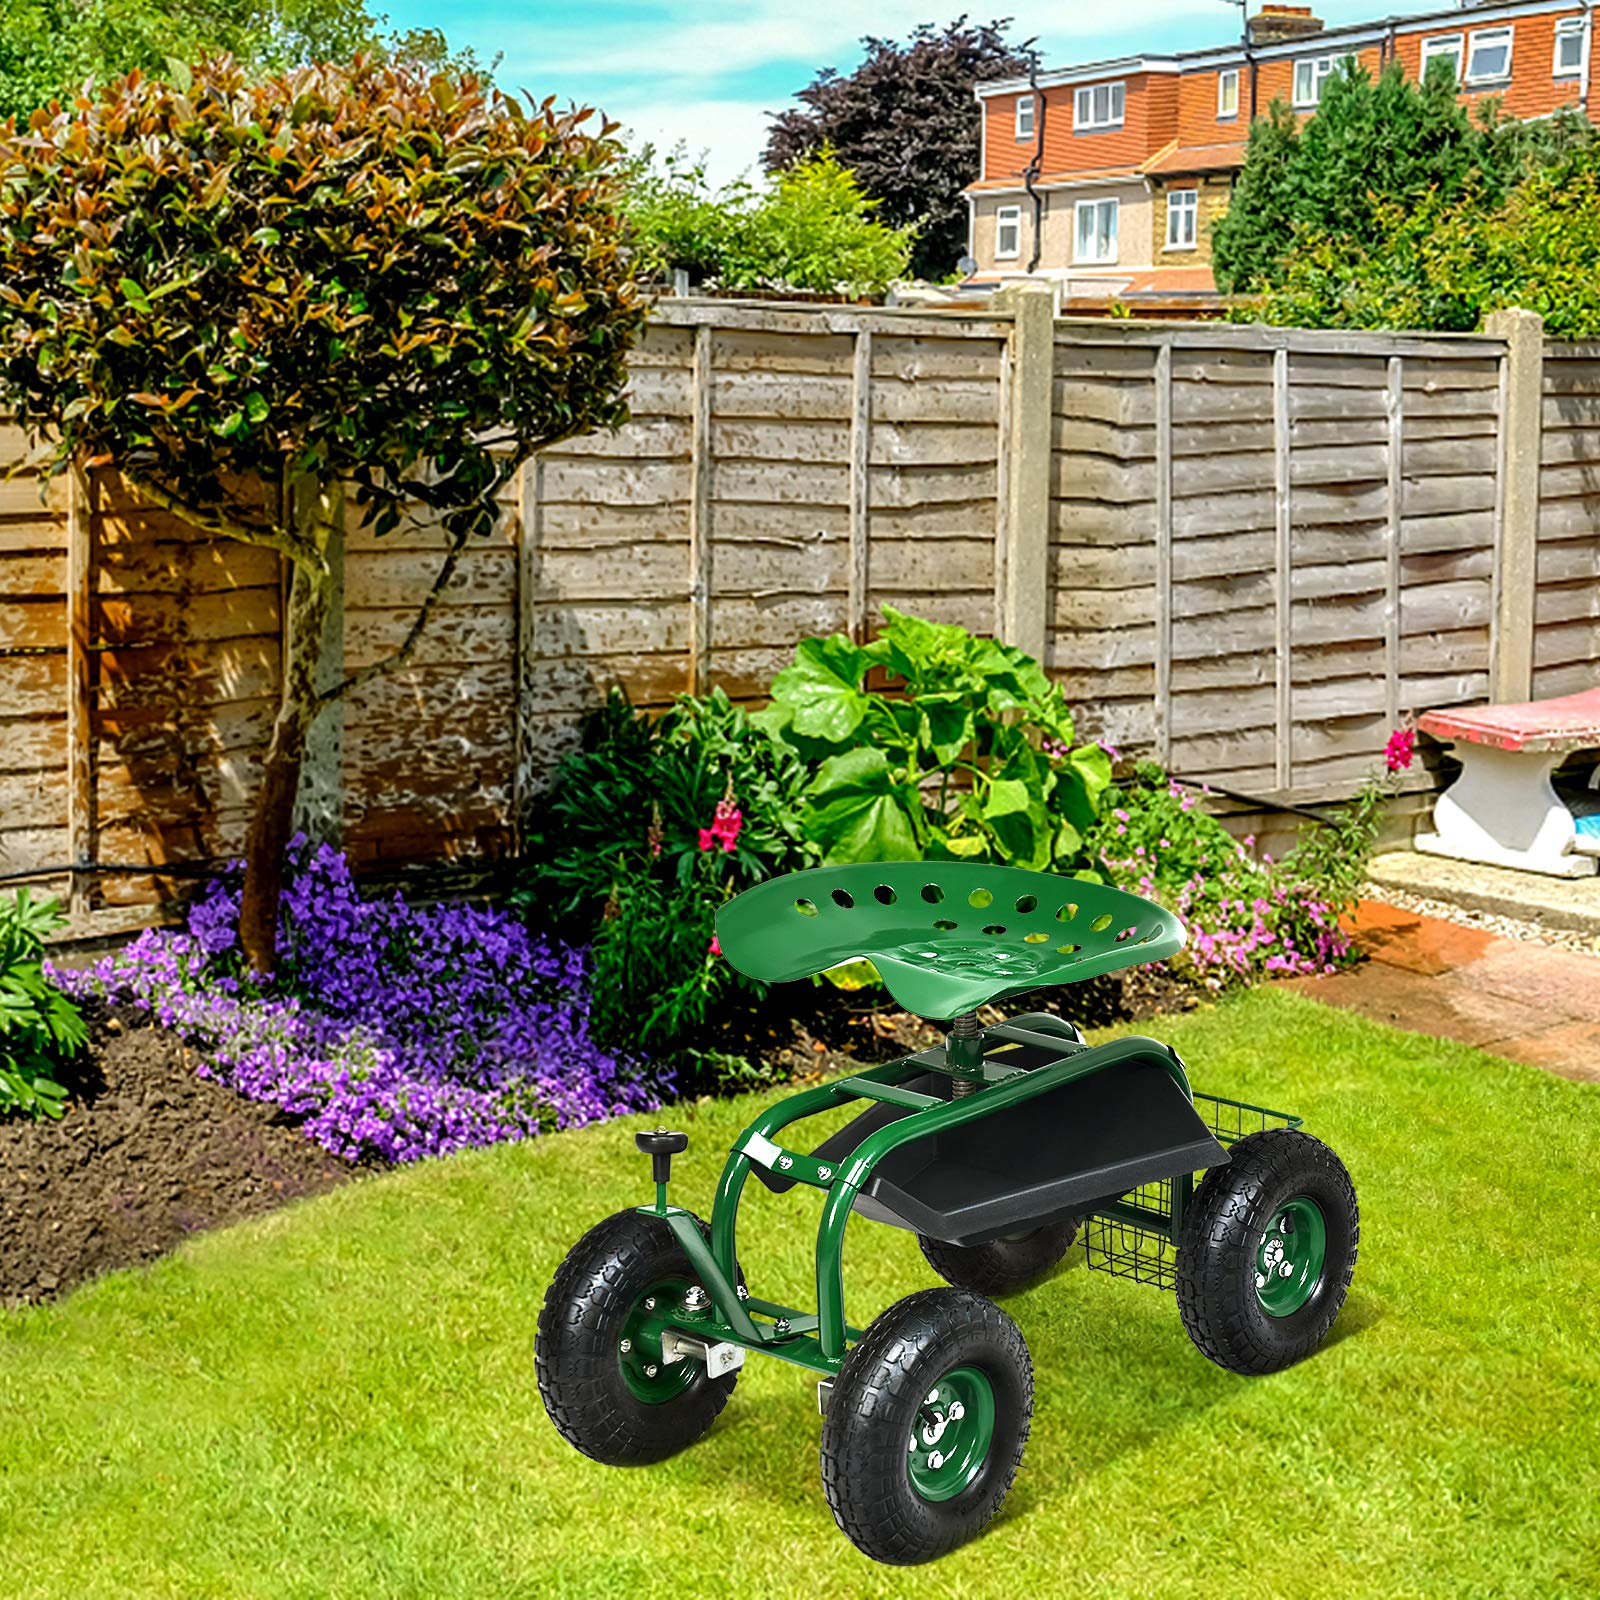 Giantex Mobile Garden Workseat, Lawn Wagon Cart (Green)